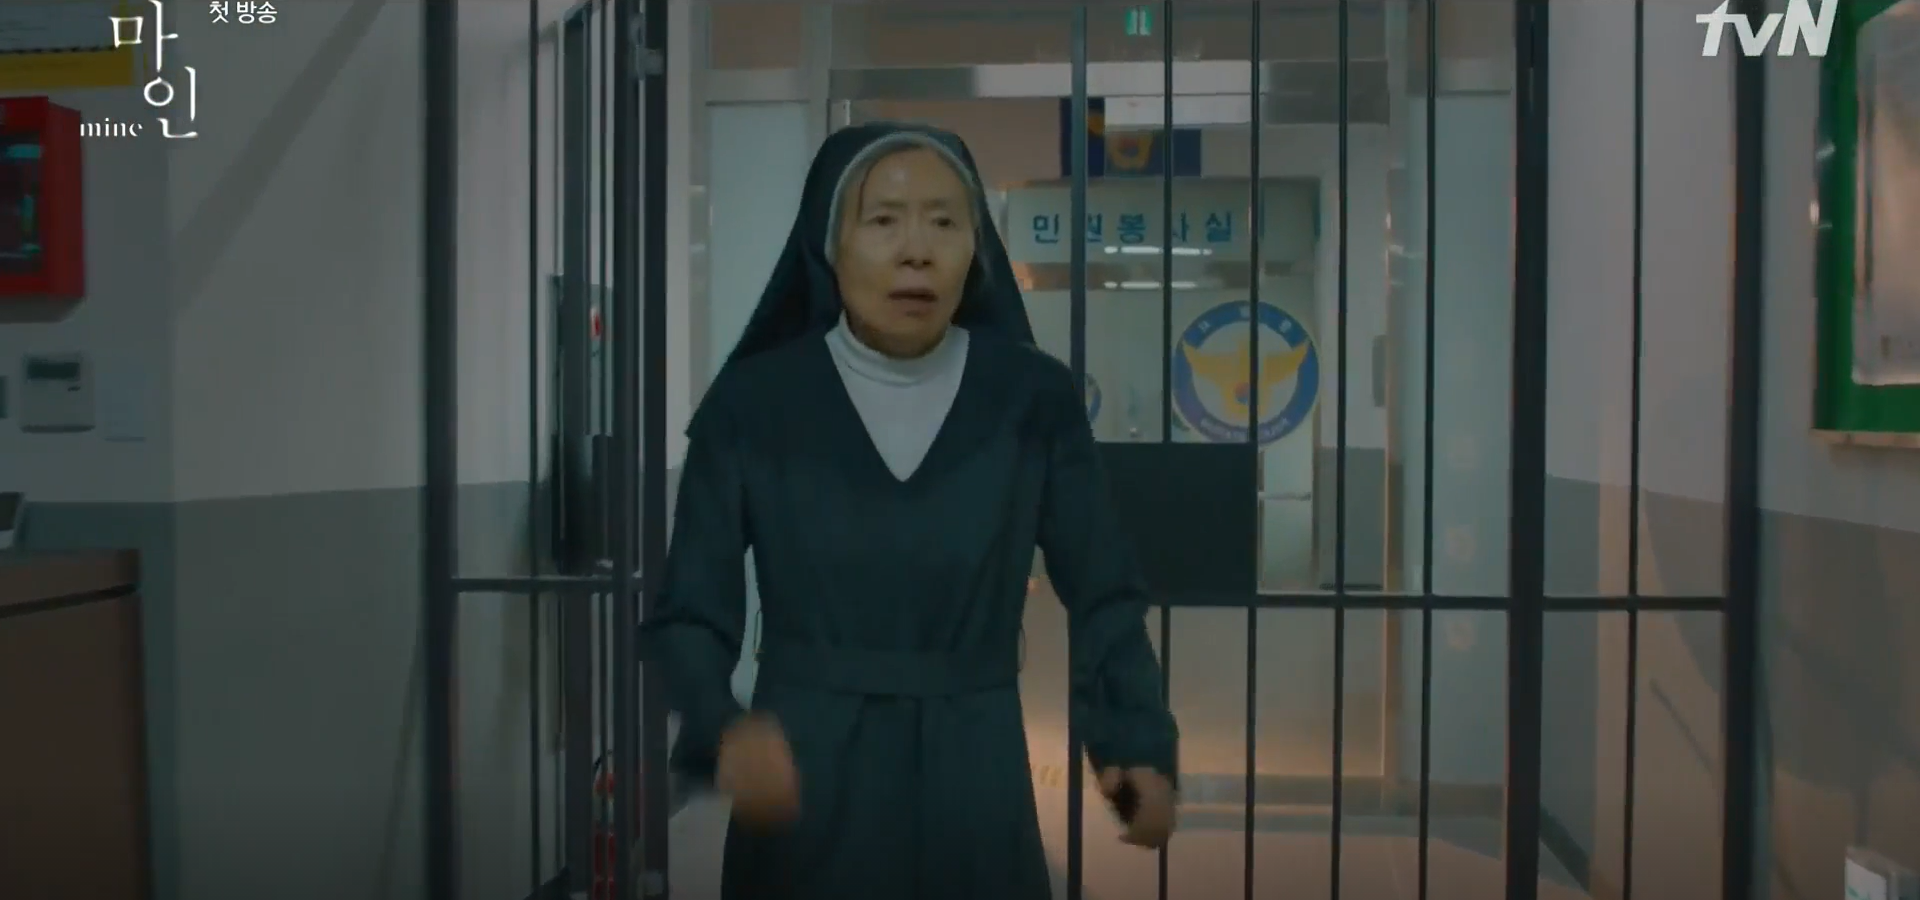 mine korean drama review - nun at police station